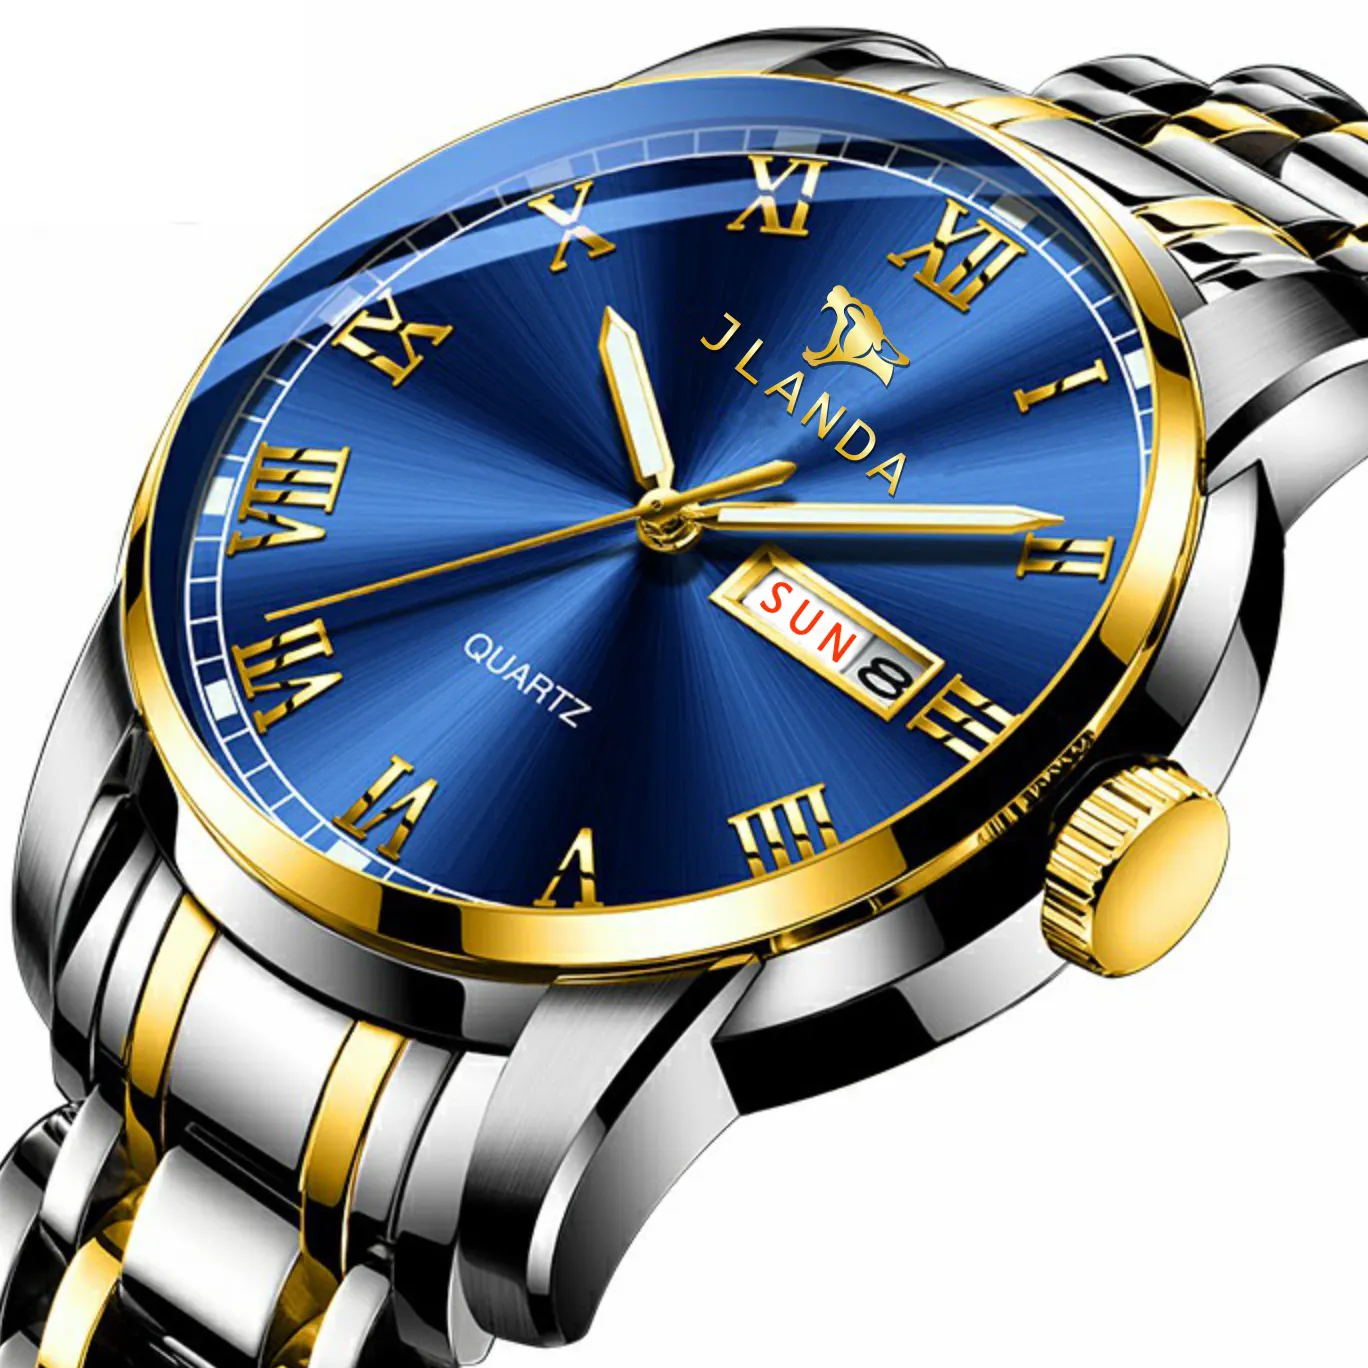 Oem brand stainless steel quartz watches men ladies quartz gold watch diamond quartz watches